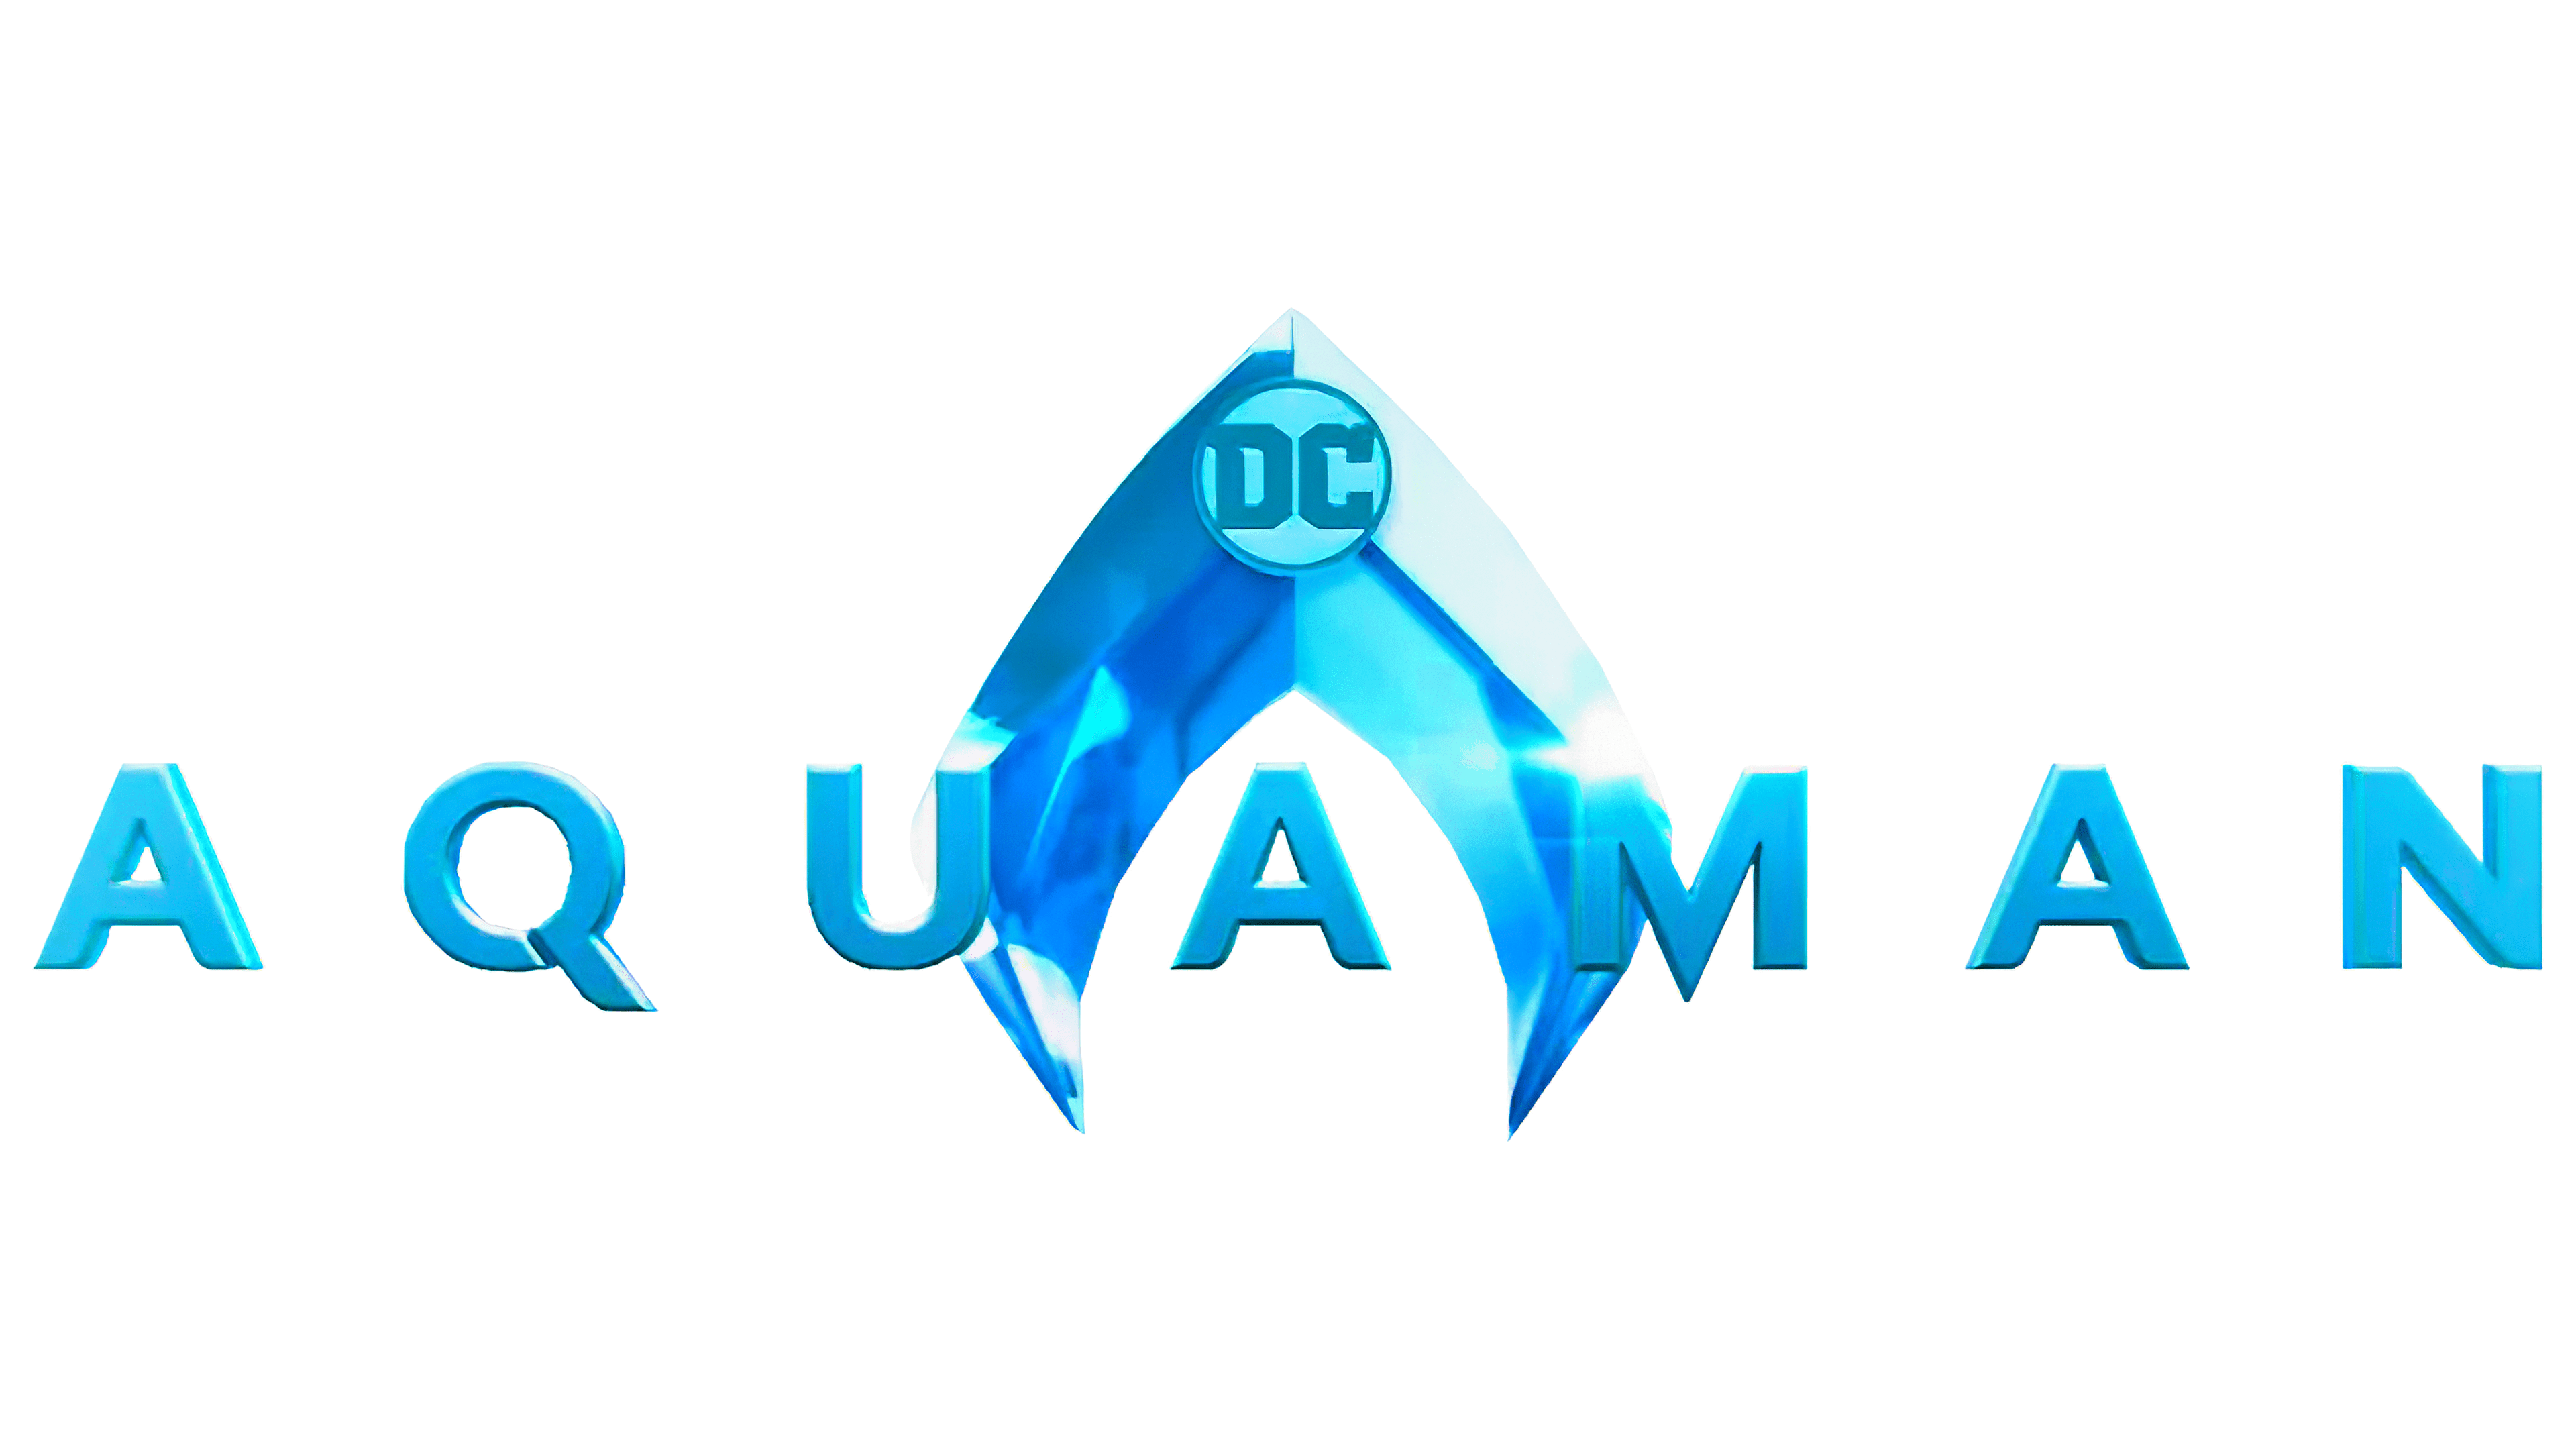 Justice League Aquaman Logo - Free Transparent PNG Clipart Images Download